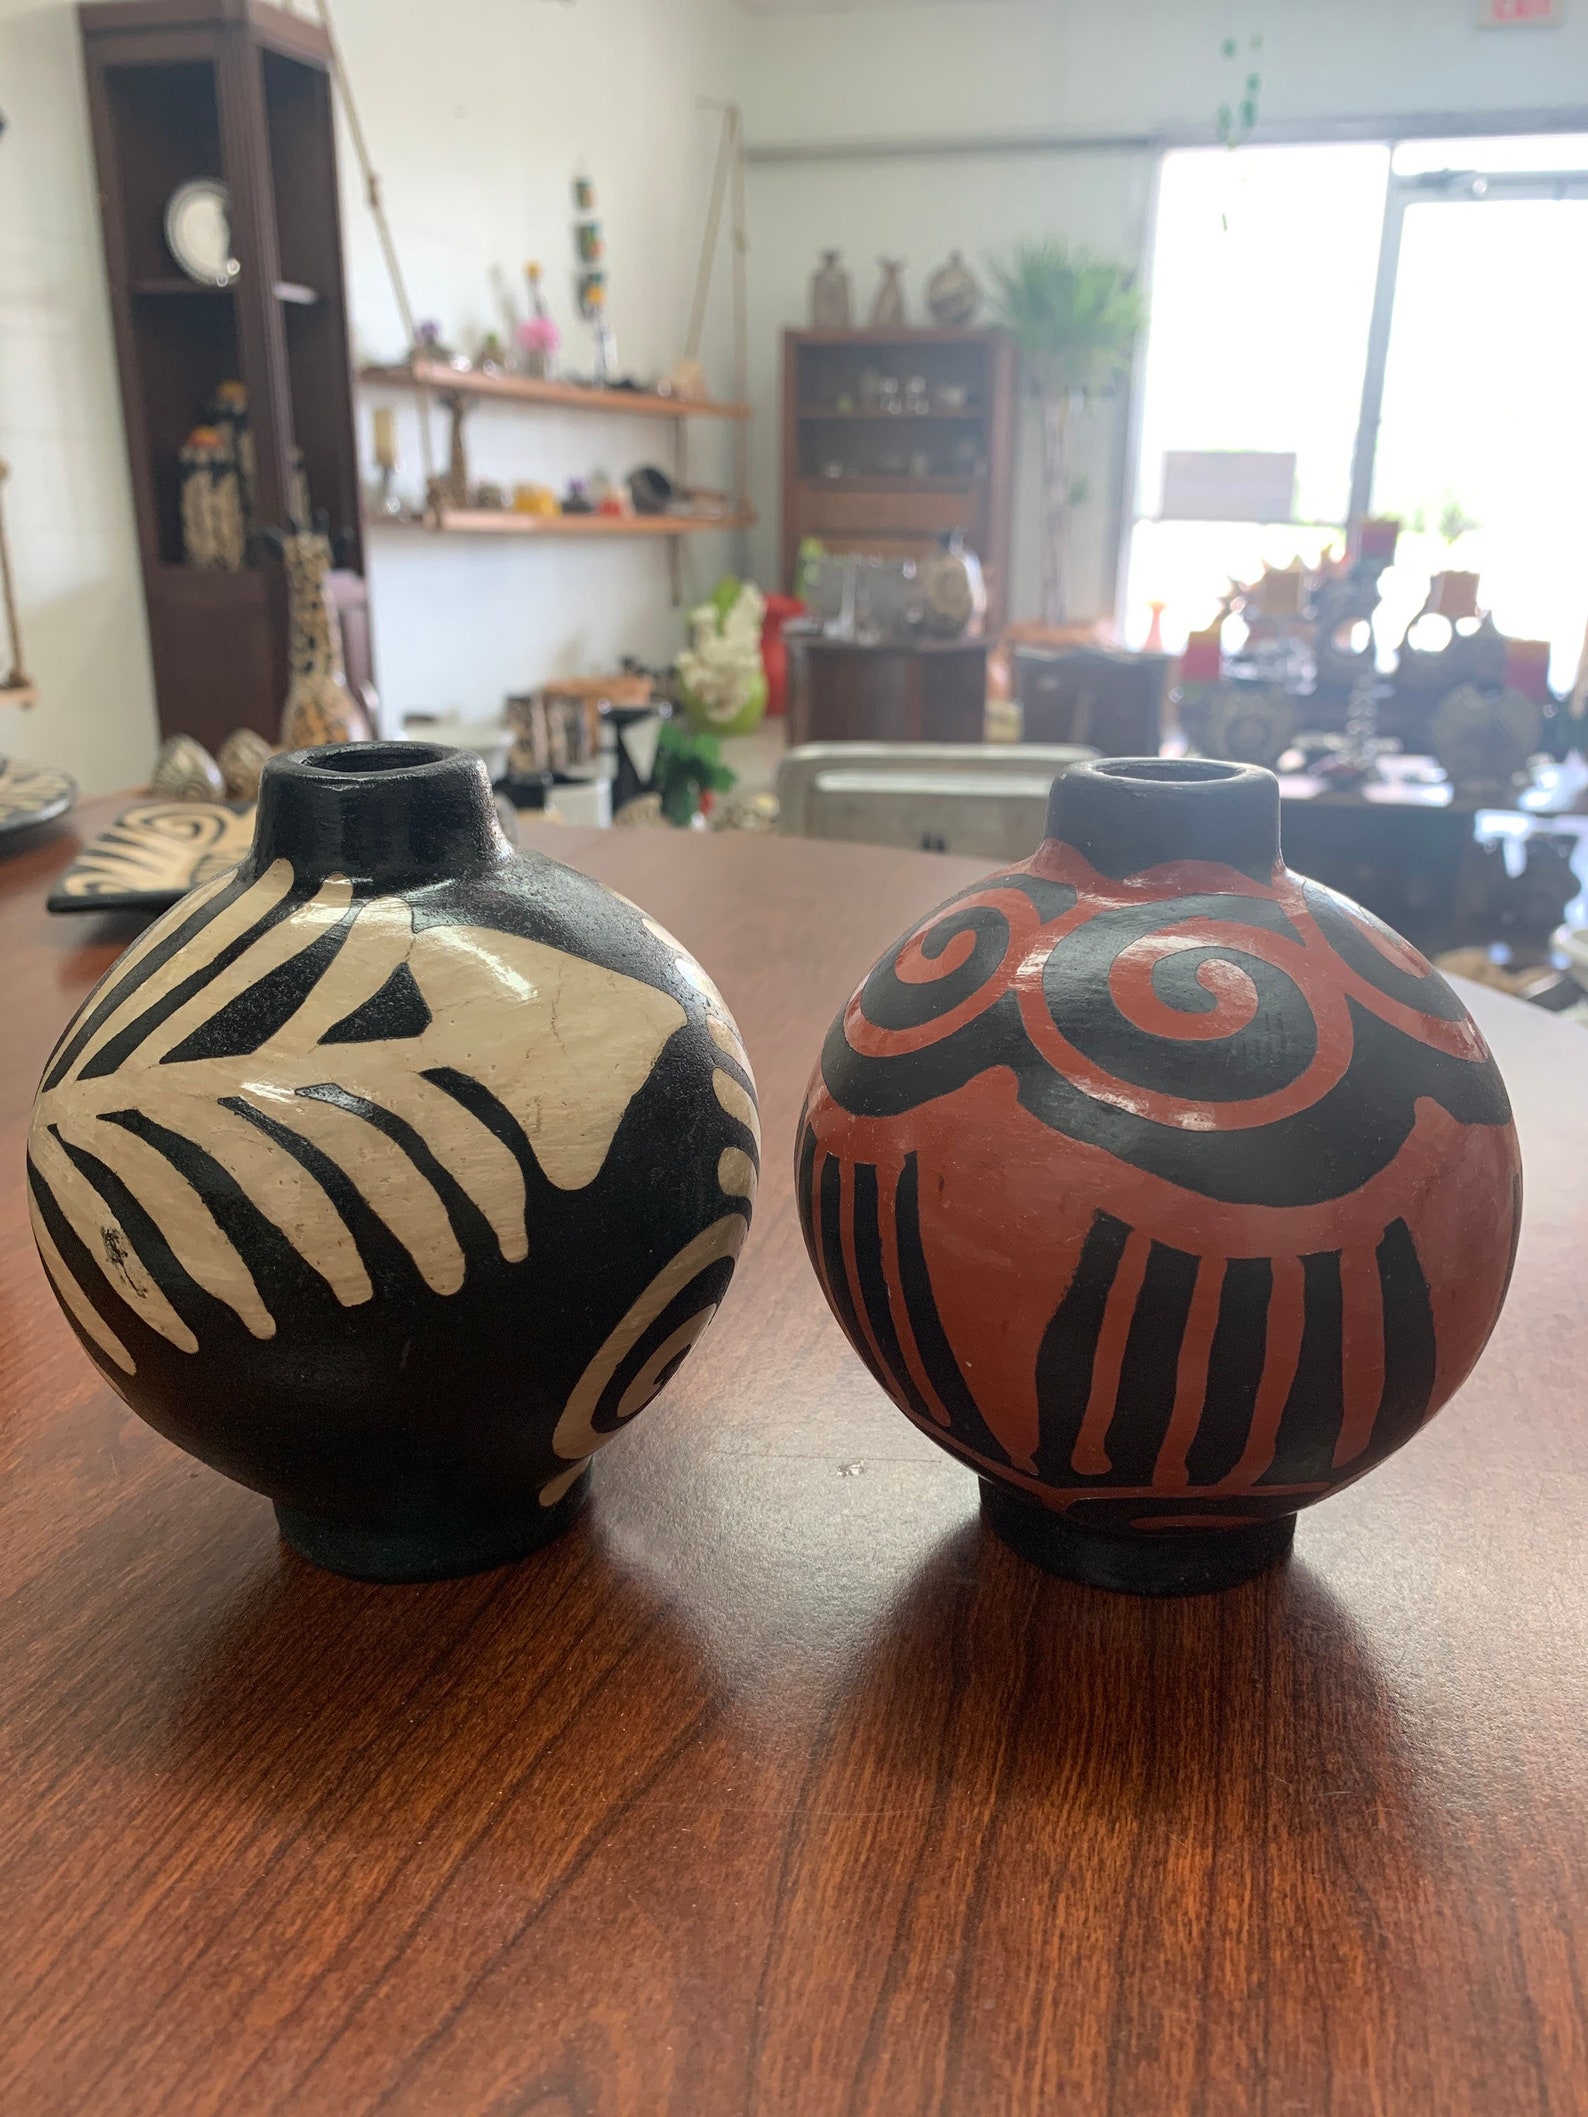 Lenca pottery for sale